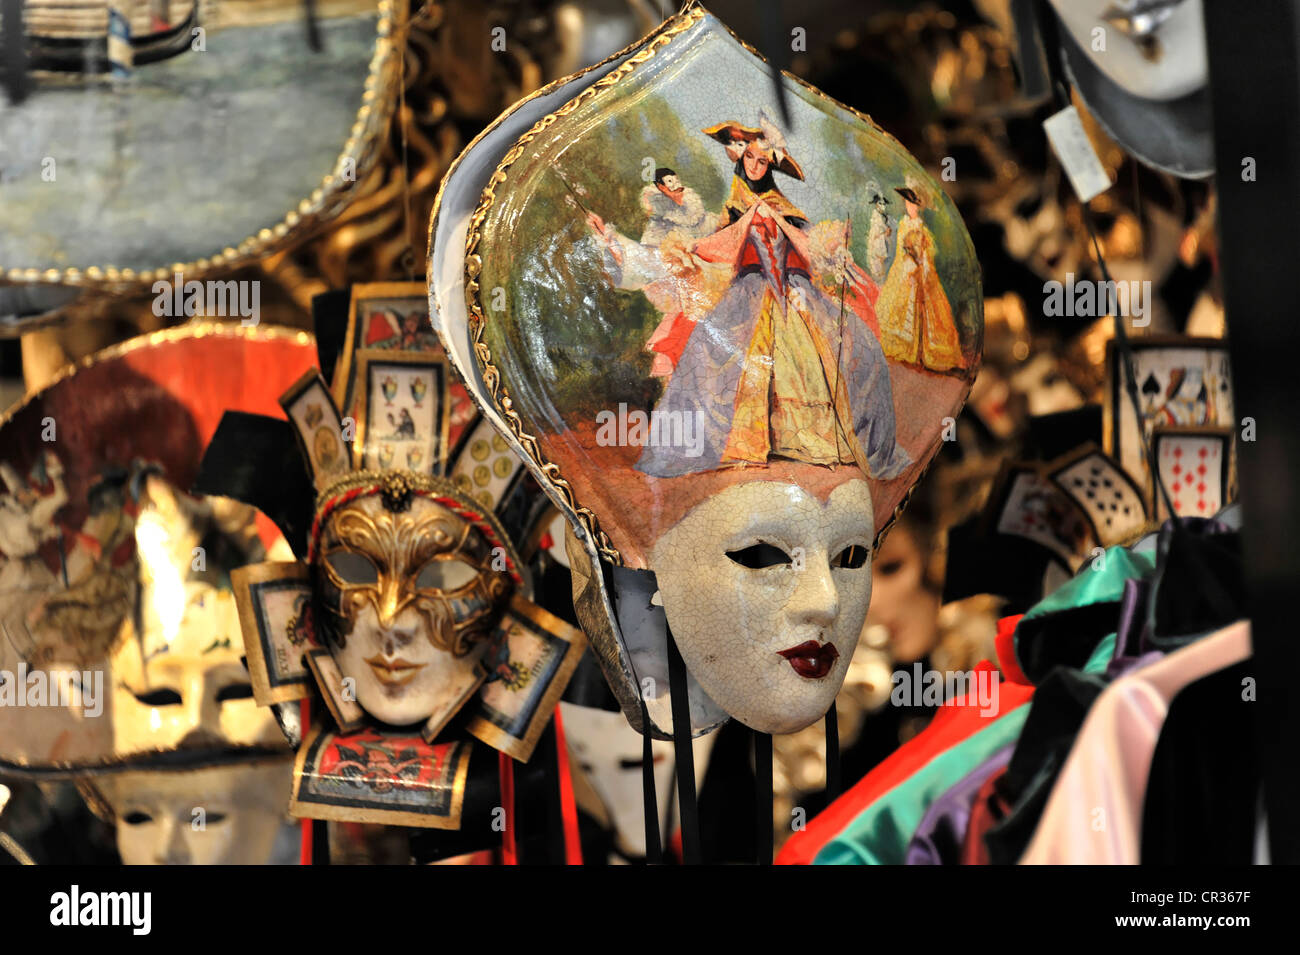 Masks in a shop, souvenirs, Venice, Veneto region, Italy, Europe Stock Photo